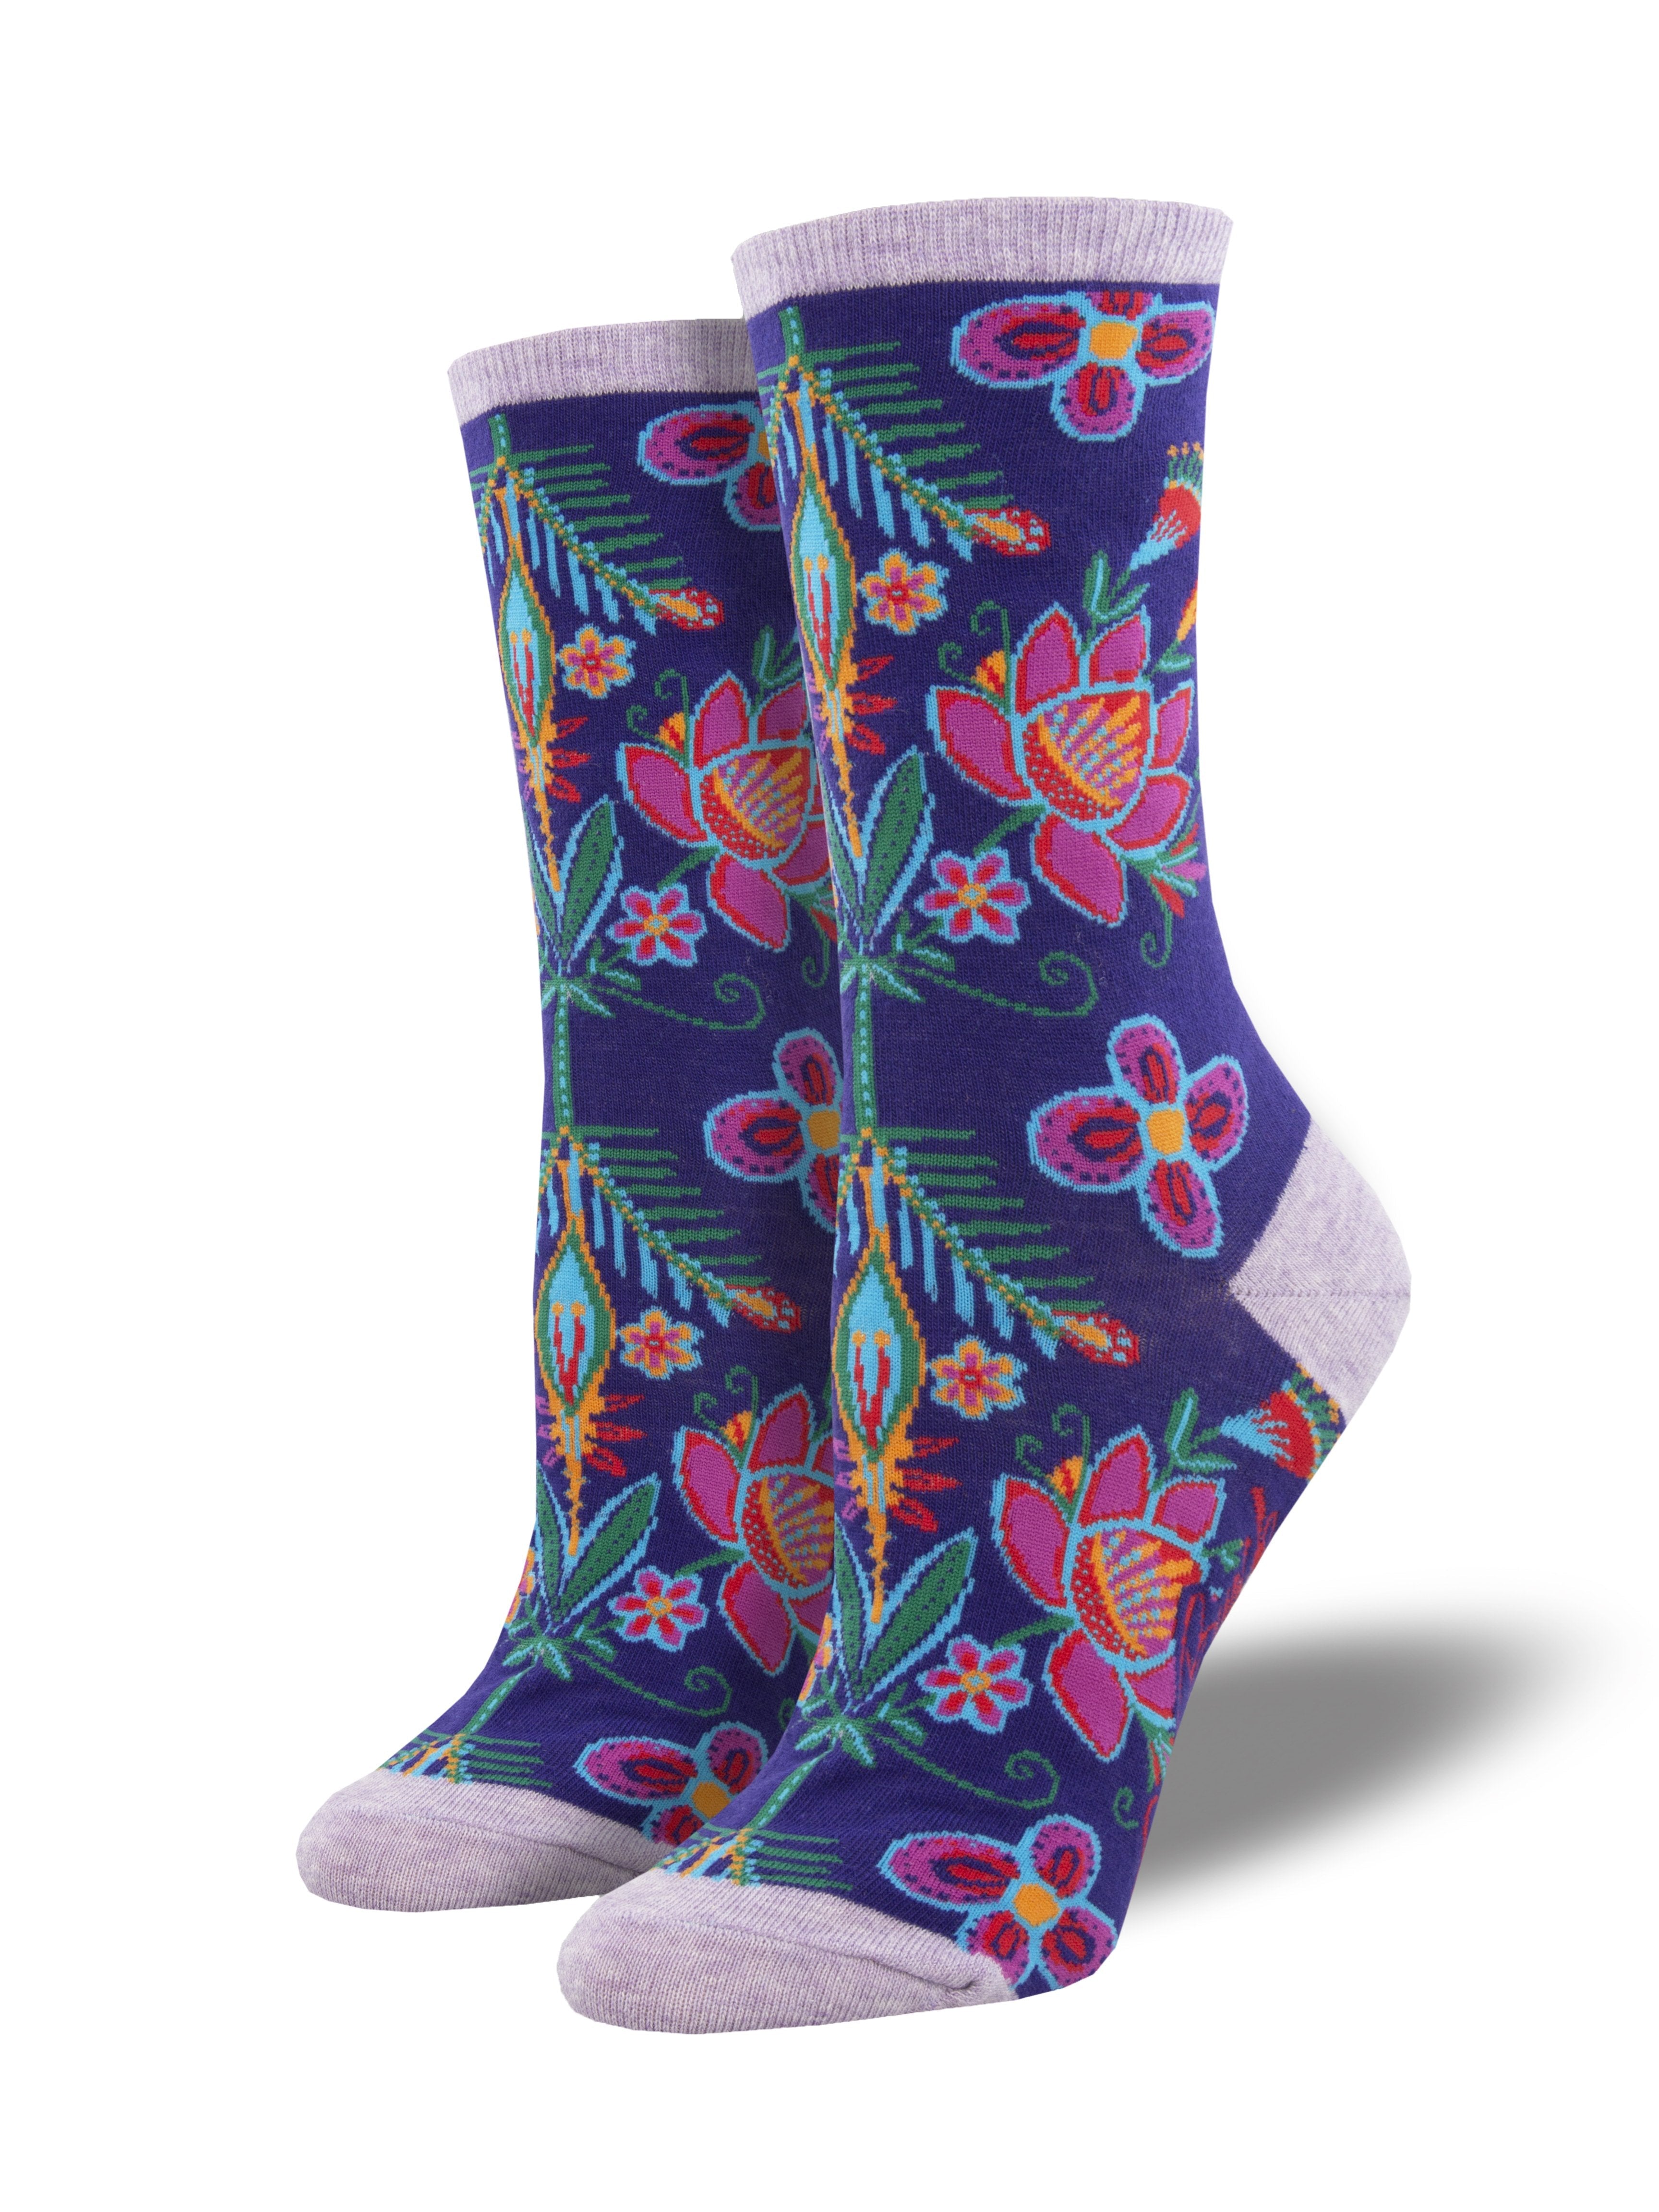 Women's Laurel Burch "Alyssa Floral" Socks